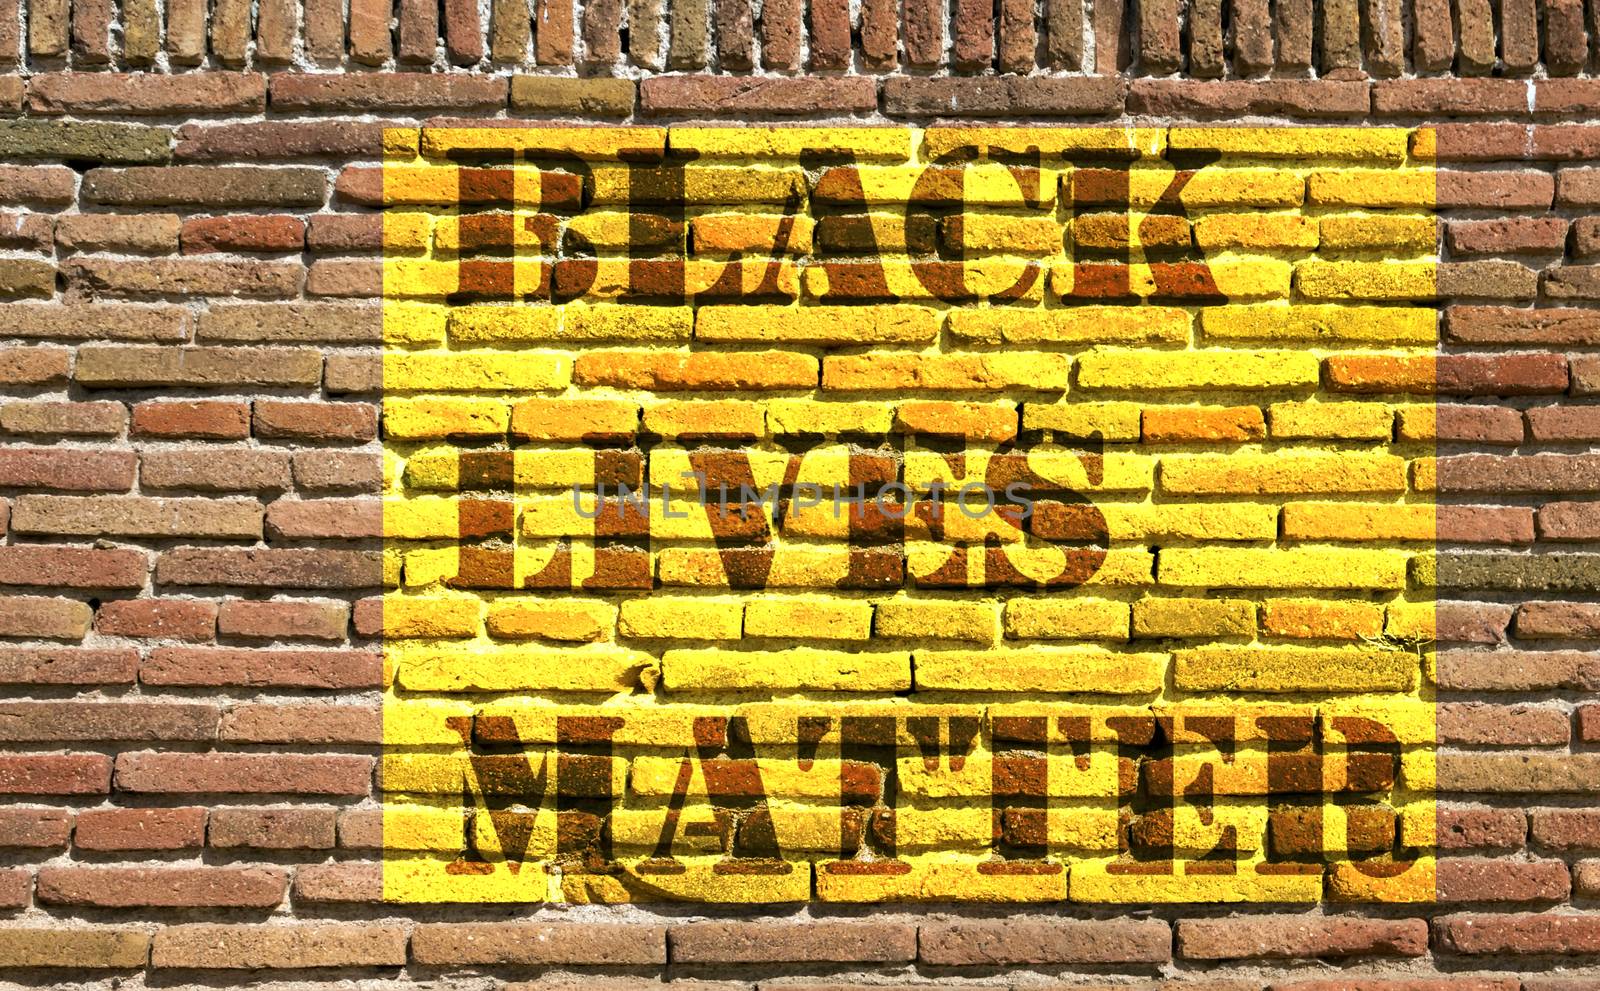 Black Lives Matter slogan liberation banner designs yellow stencil backdrop old brick wall background texture